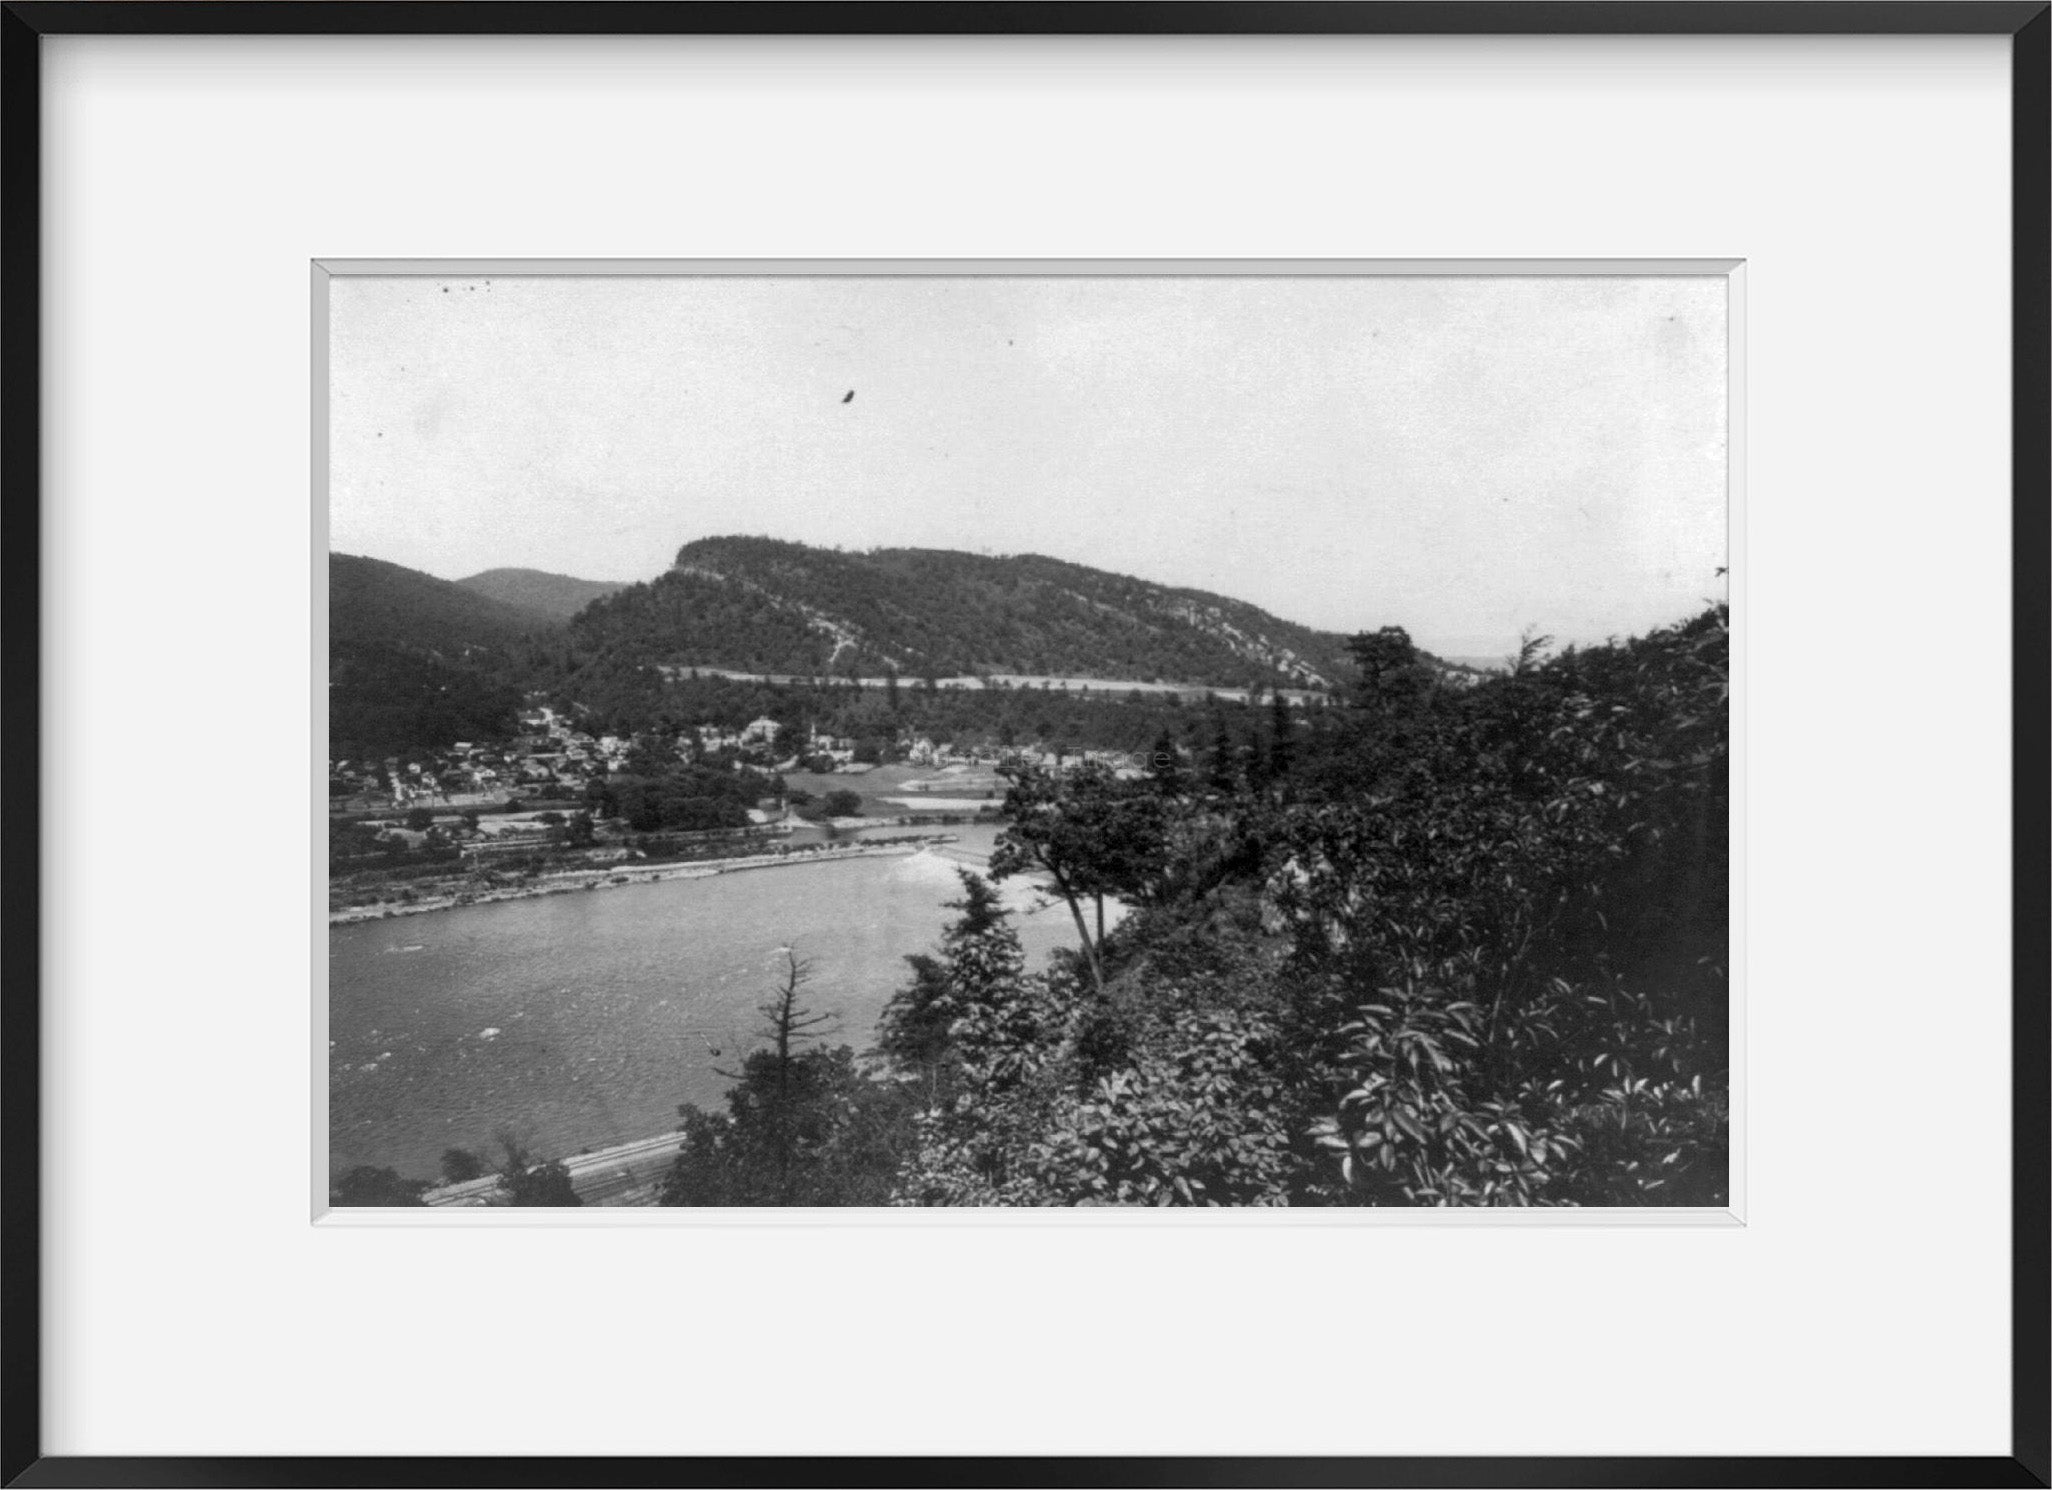 c1906 photograph of Tilbury's Knobb from Pikes Peak, Nanticoke, Pennsylvania